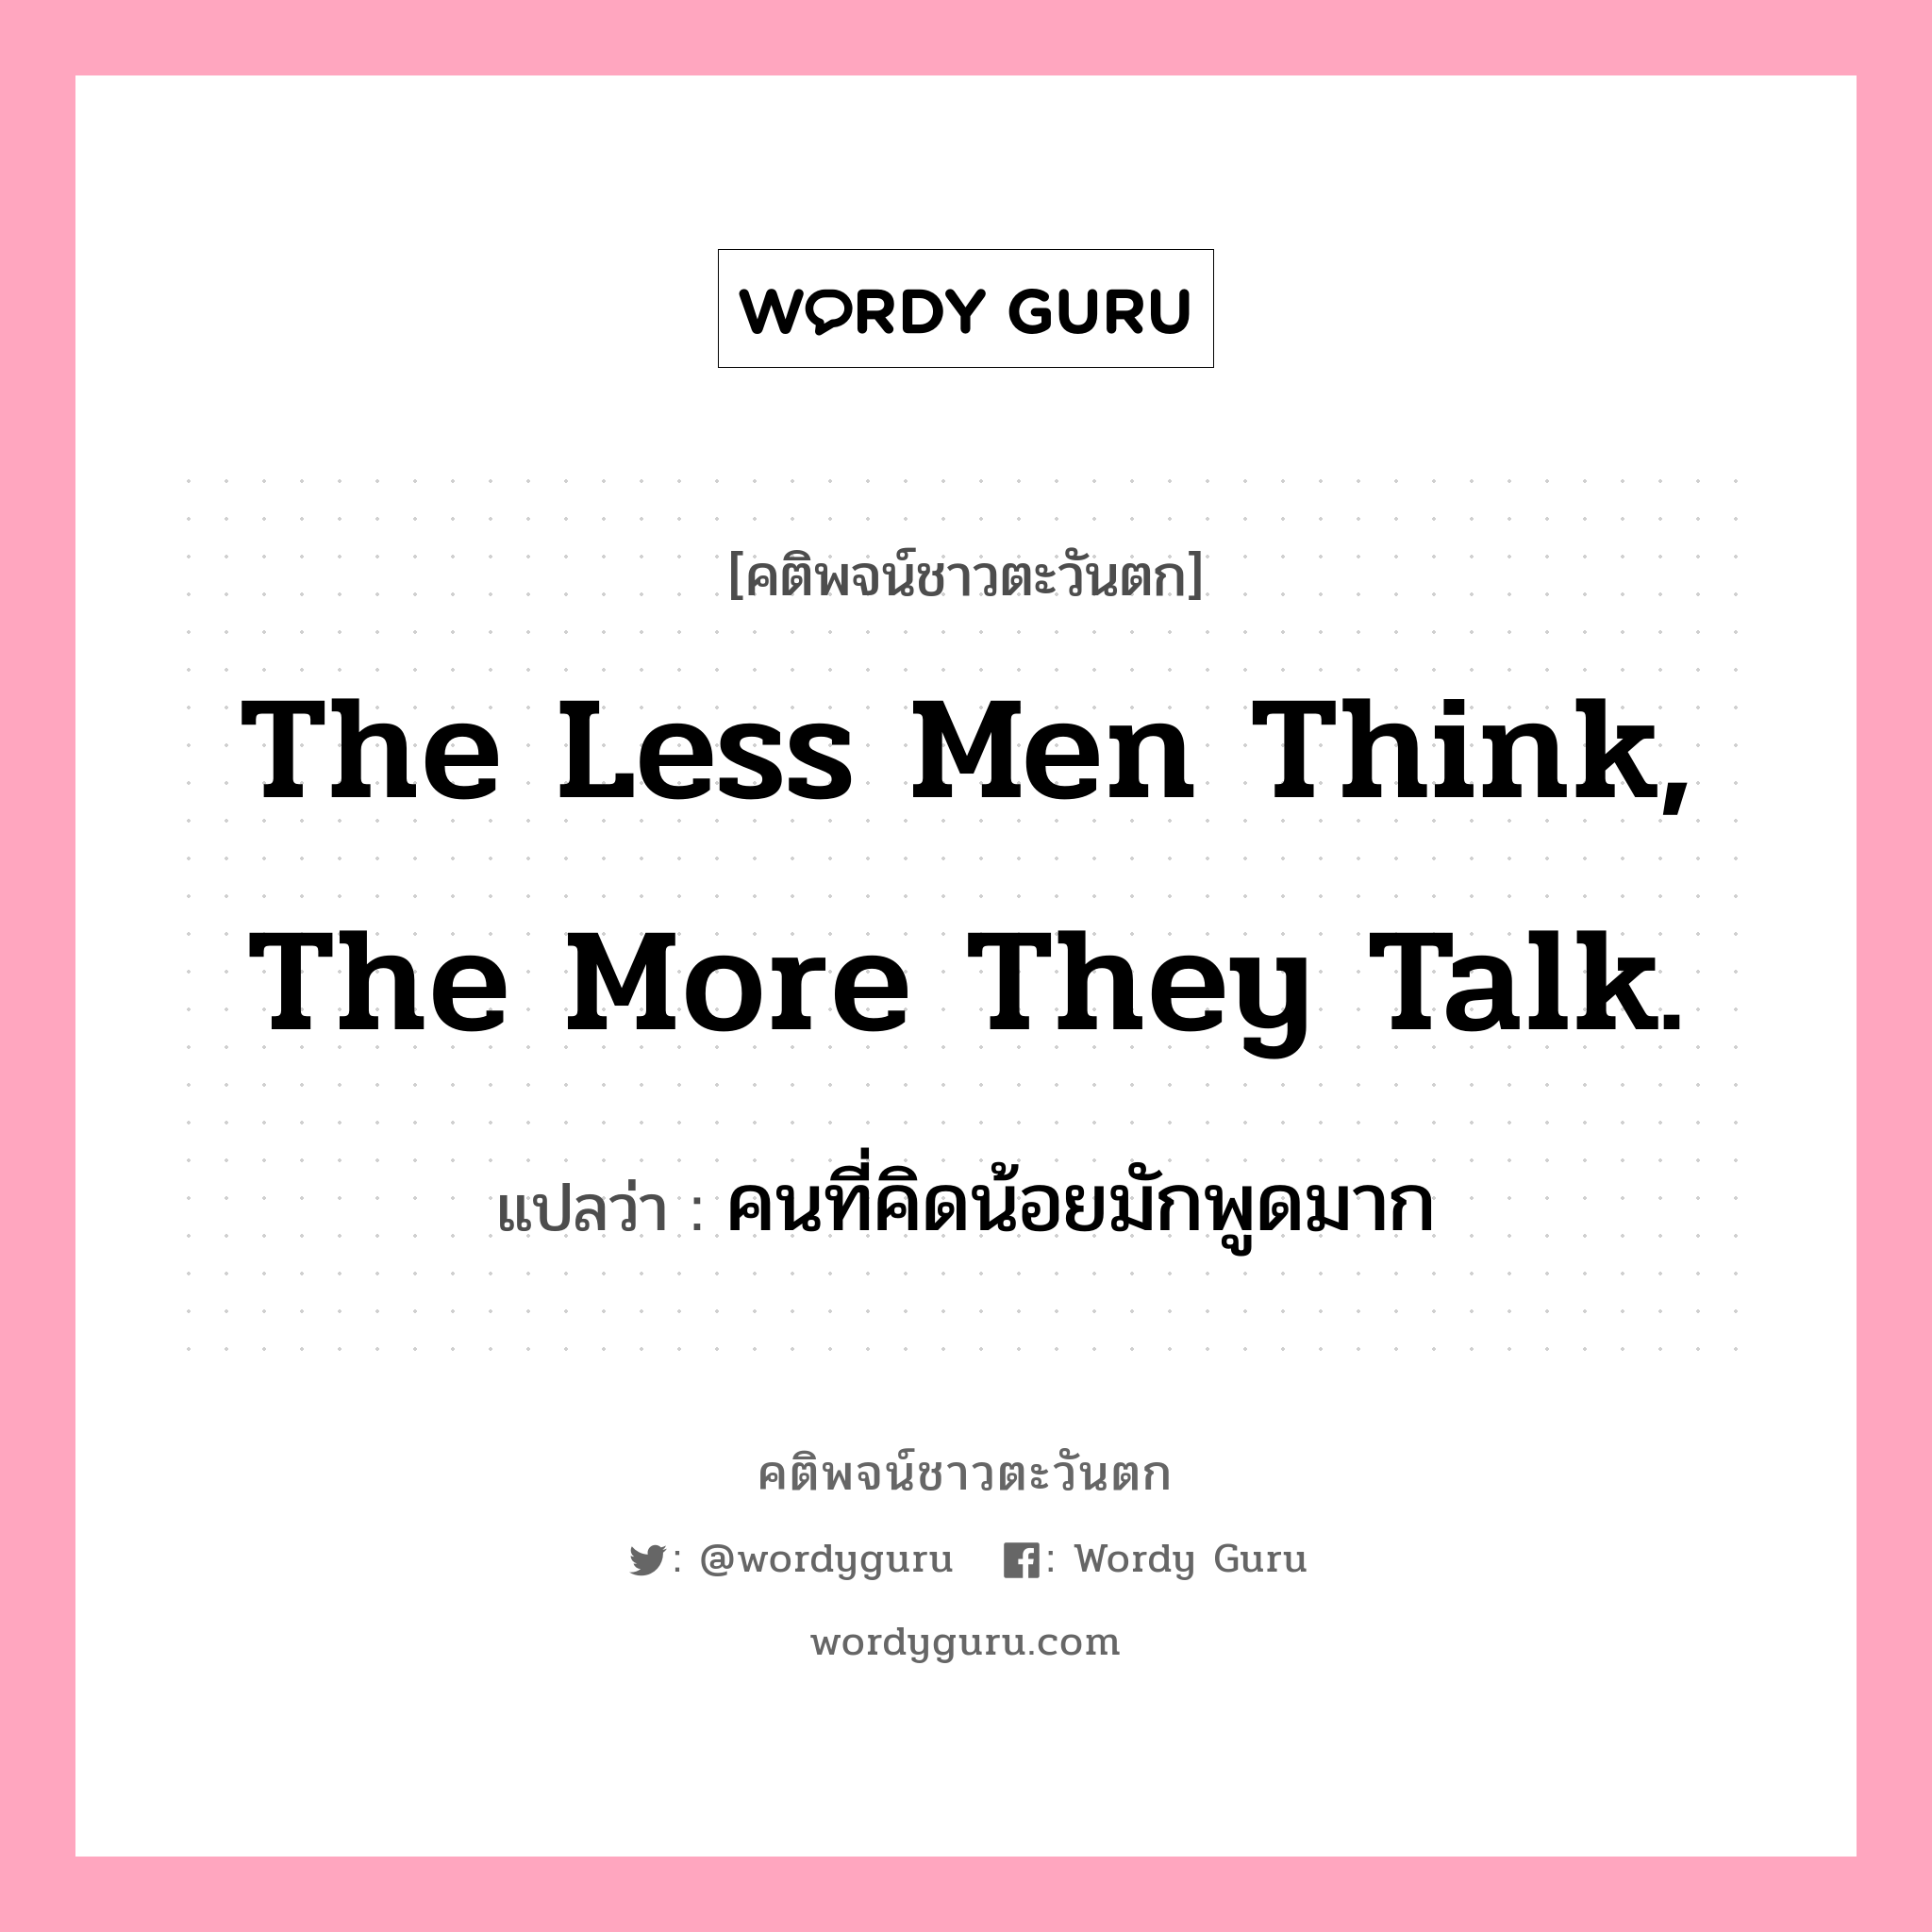 The less men think, the more they talk., คติพจน์ชาวตะวันตก The less men think, the more they talk. แปลว่า คนที่คิดน้อยมักพูดมาก